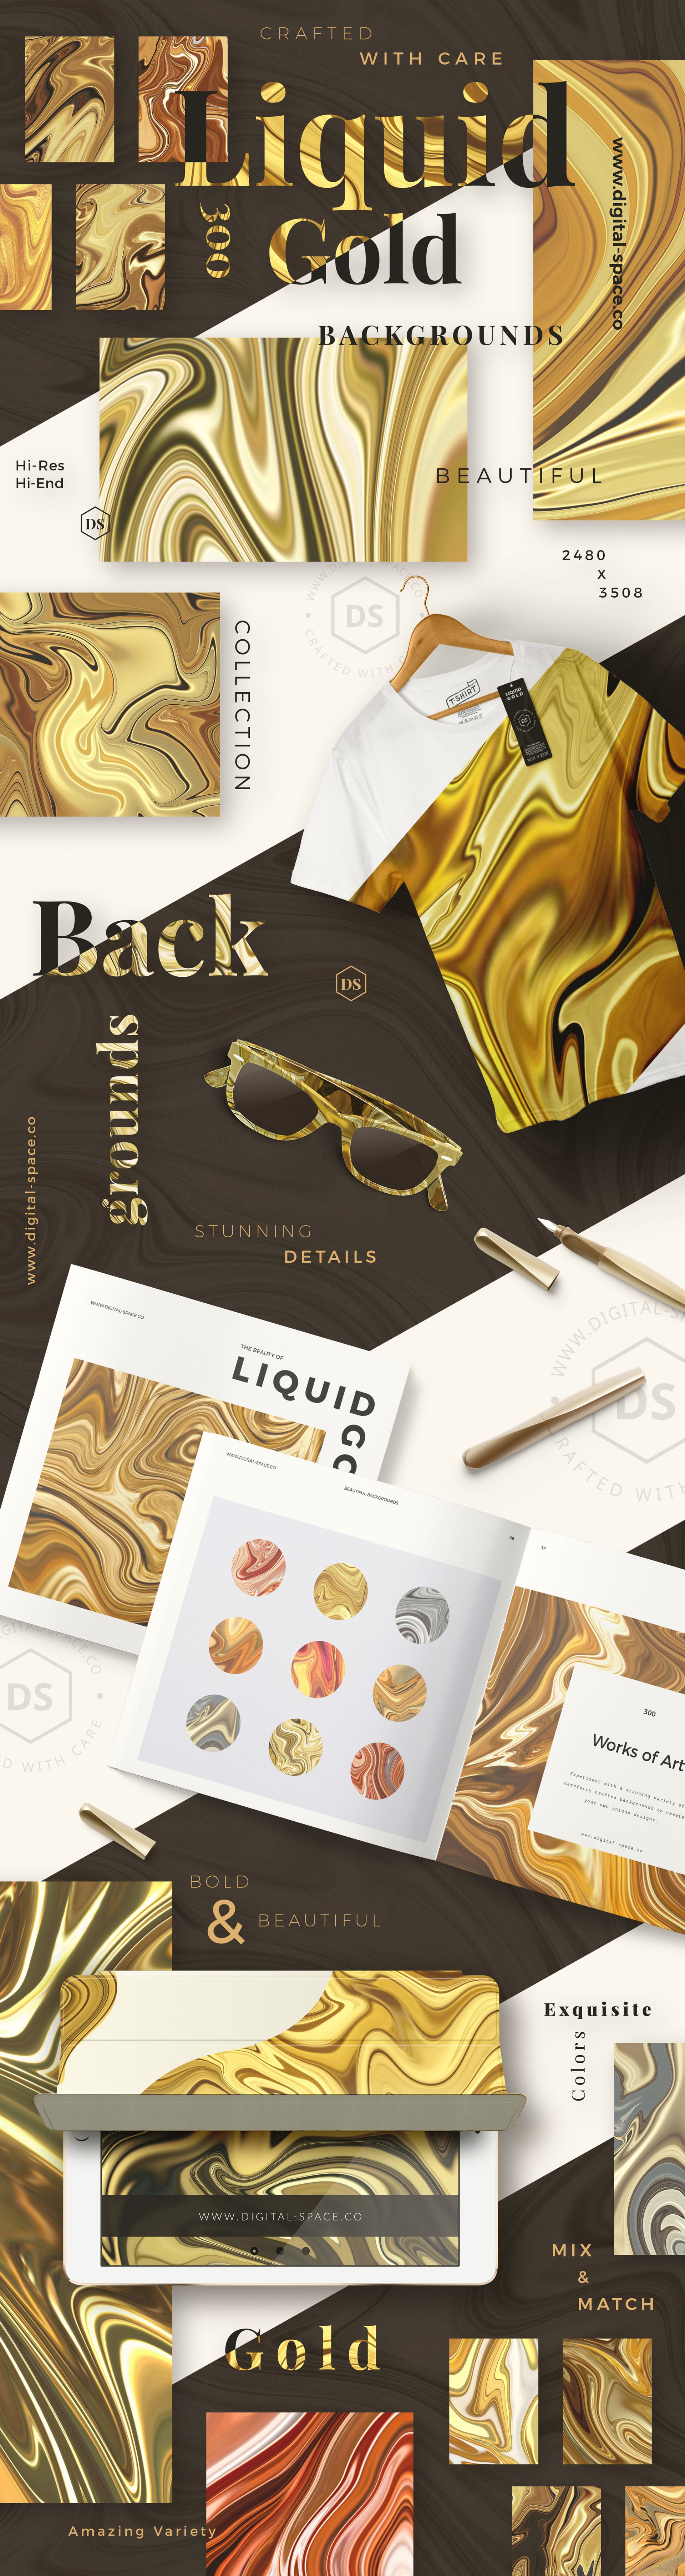 300 Liquid Gold Backgrounds